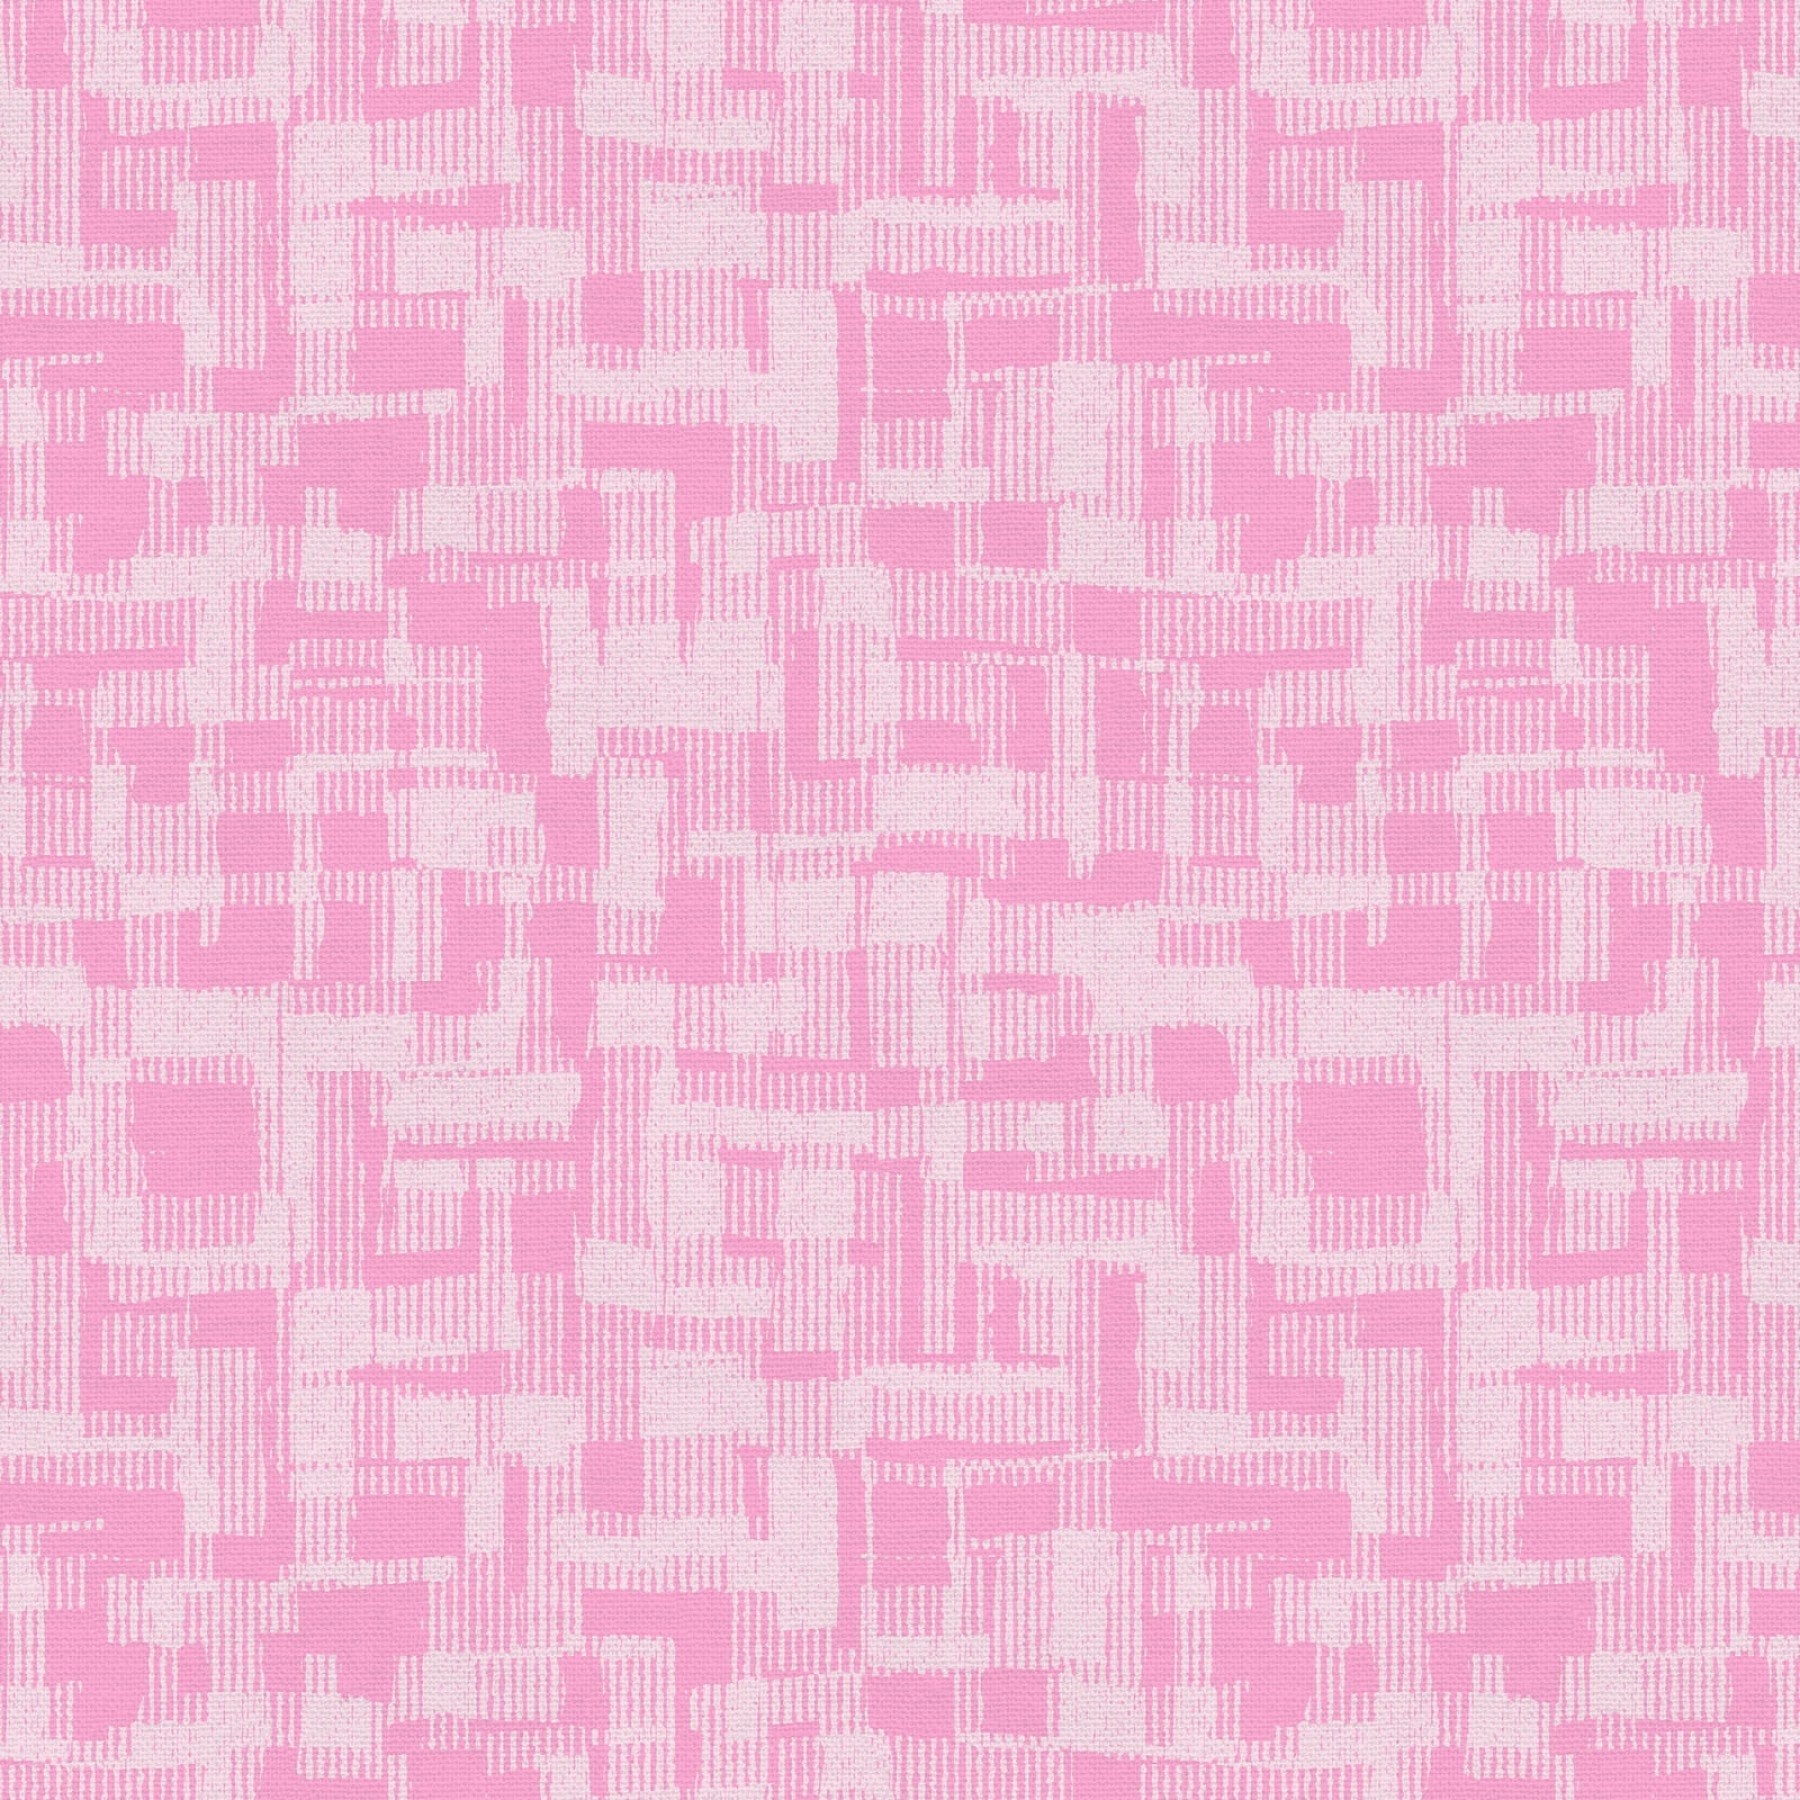 Pink Tonal Barcodes Cotton Wideback Fabric Per Yard